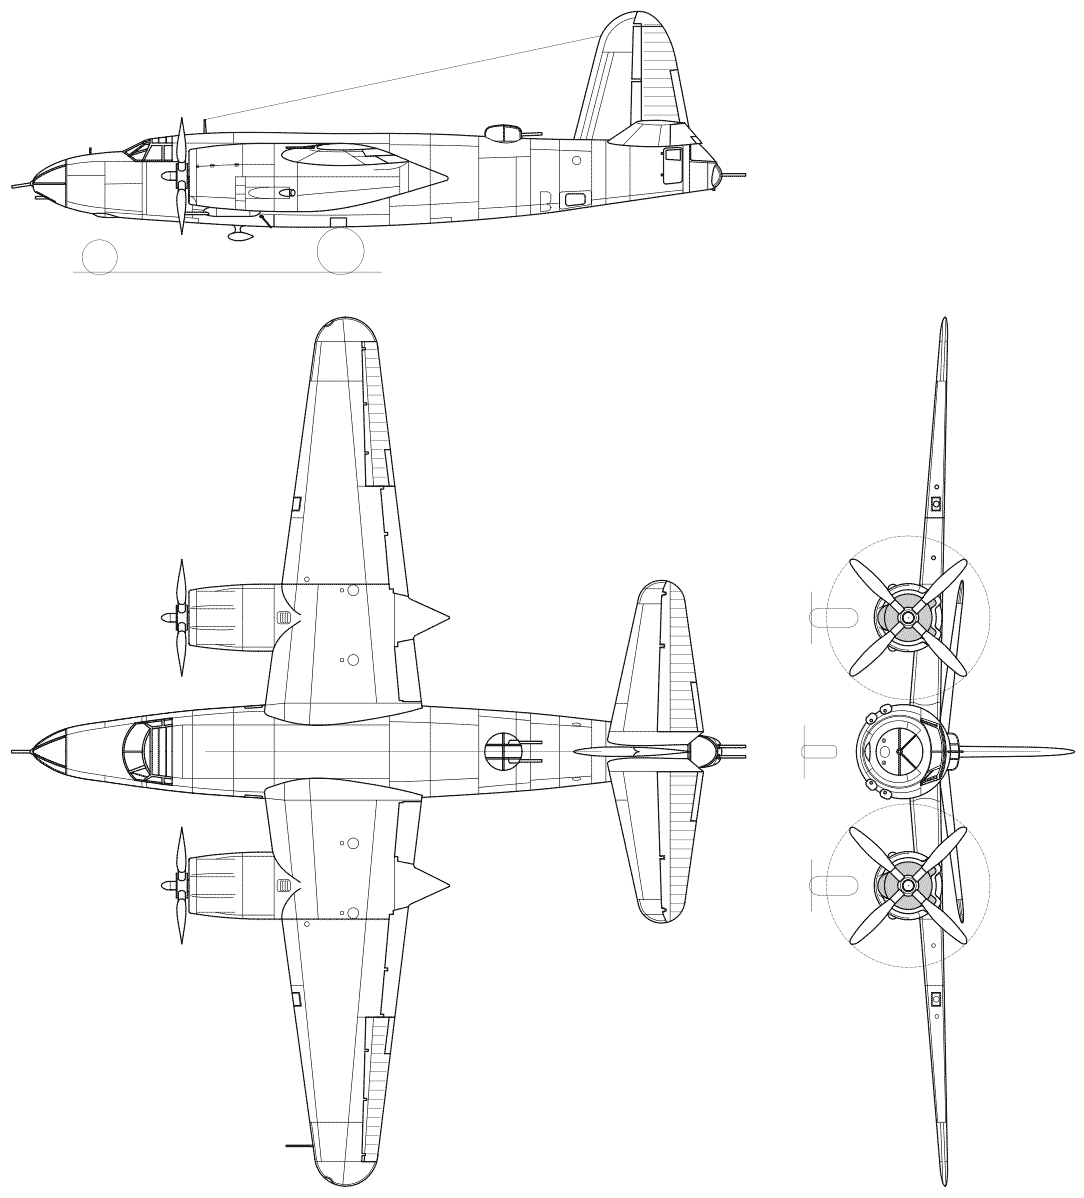 Martin B-26 Marauder blueprint